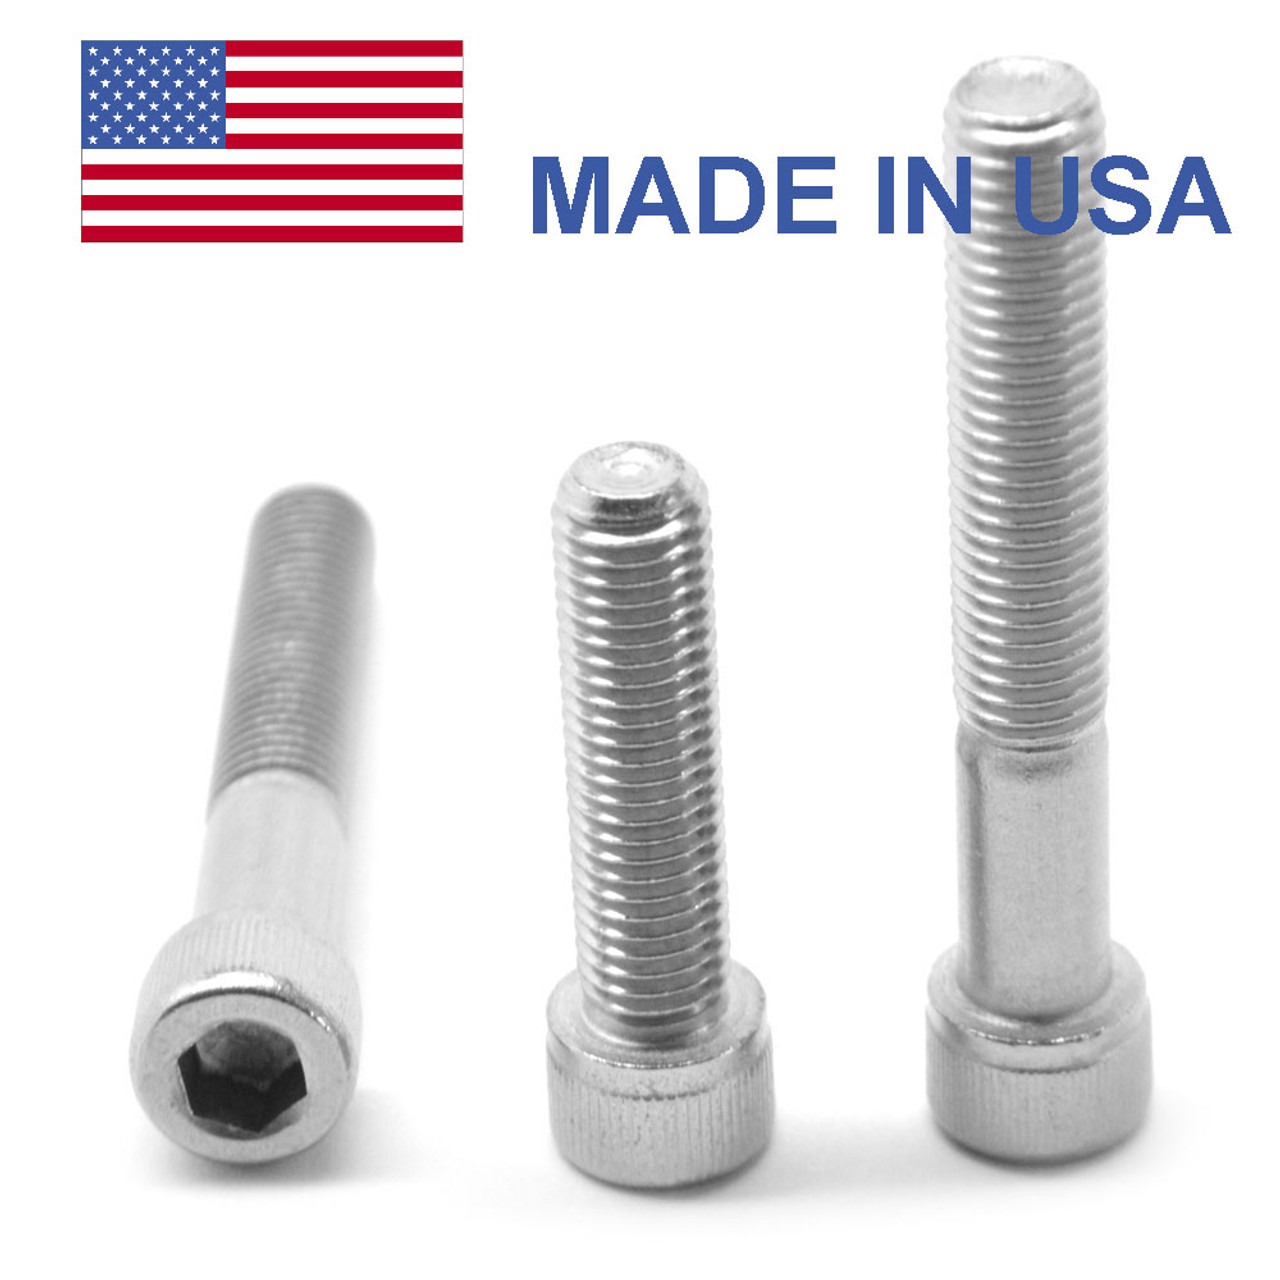 5/16-18 x 3 Coarse Thread Socket Head Cap Screw - USA Alloy Steel Zinc Plated